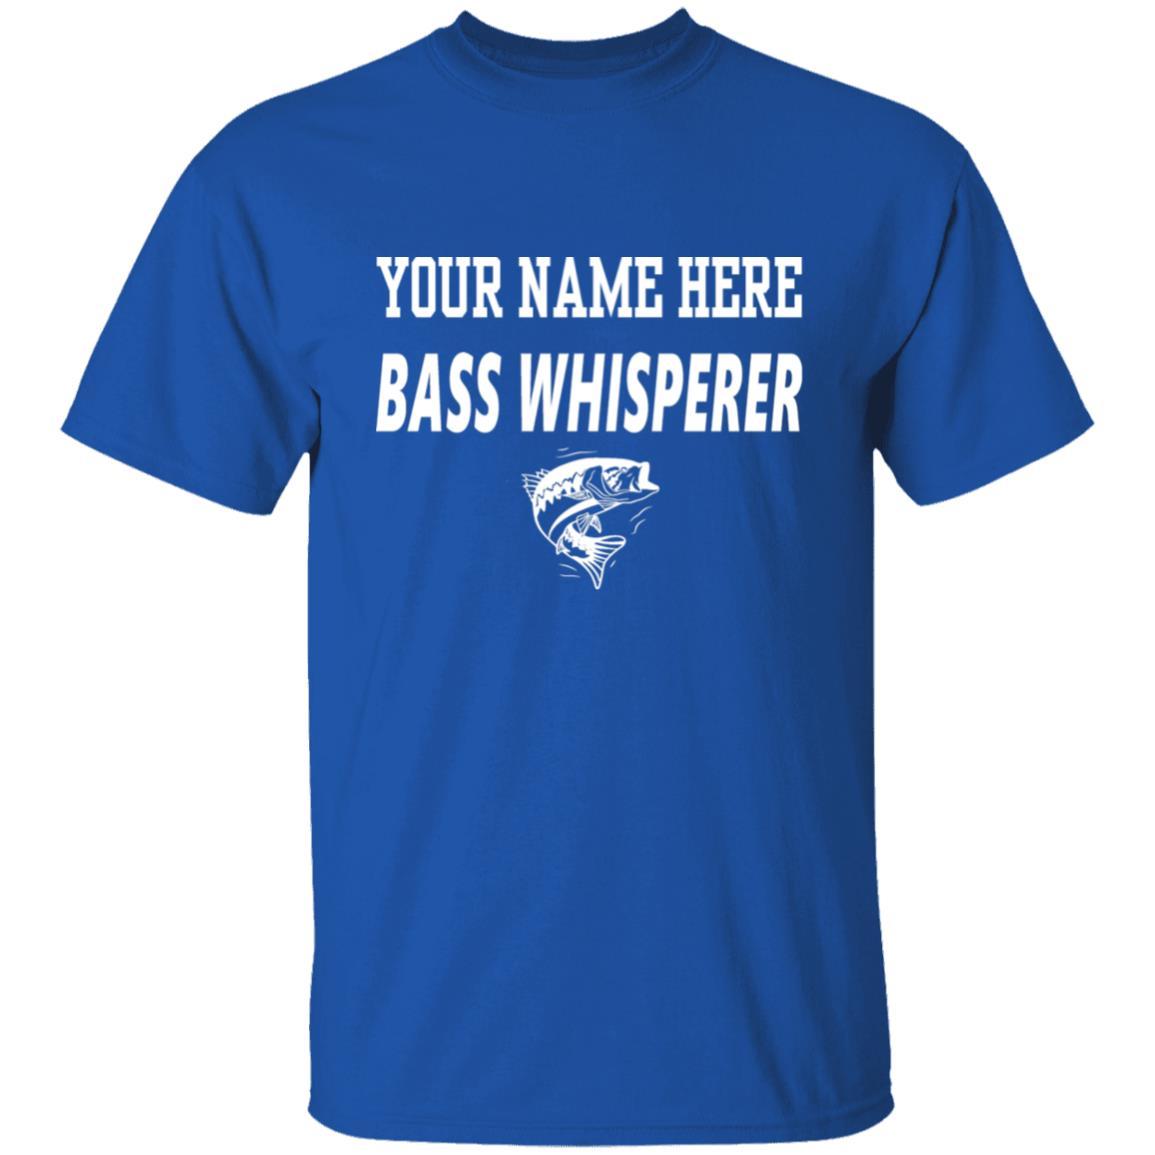 Personalized bass whisperer t shirt w royal